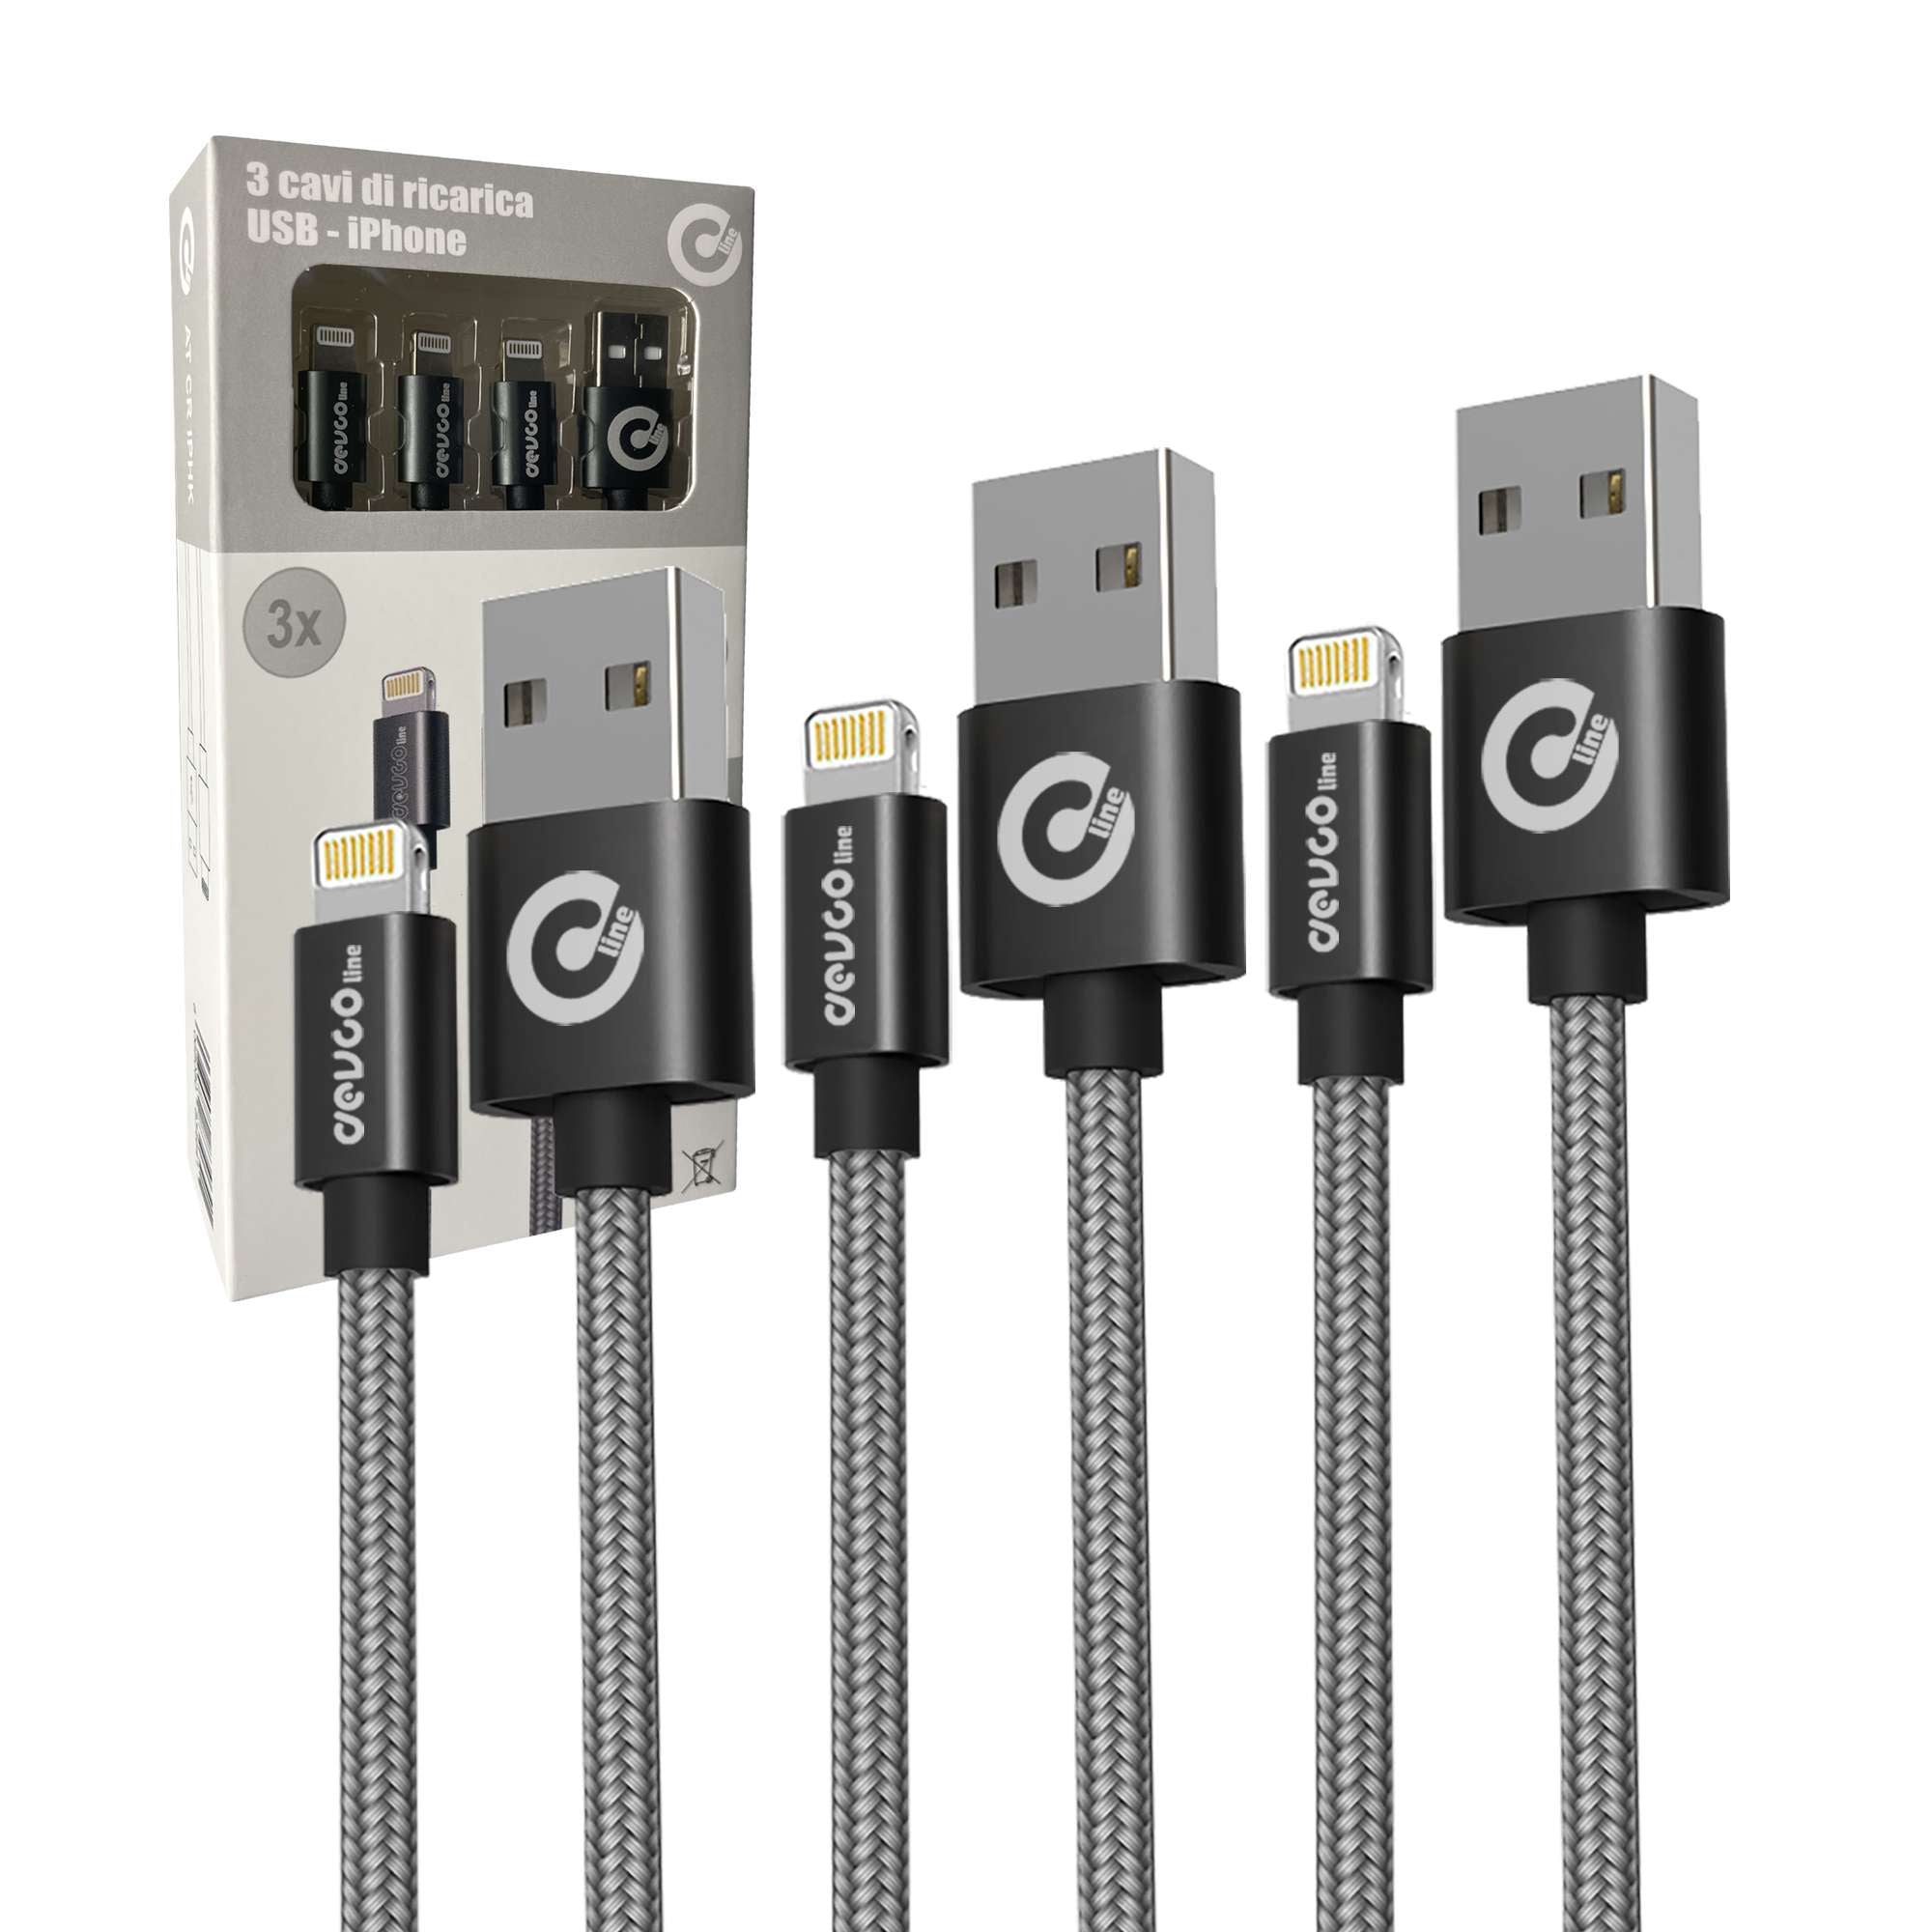 Kit set di 3 cavi USB iPhone (1m , 2m , 3m) attacco USB-A - DEVCOline ATCR IPHK